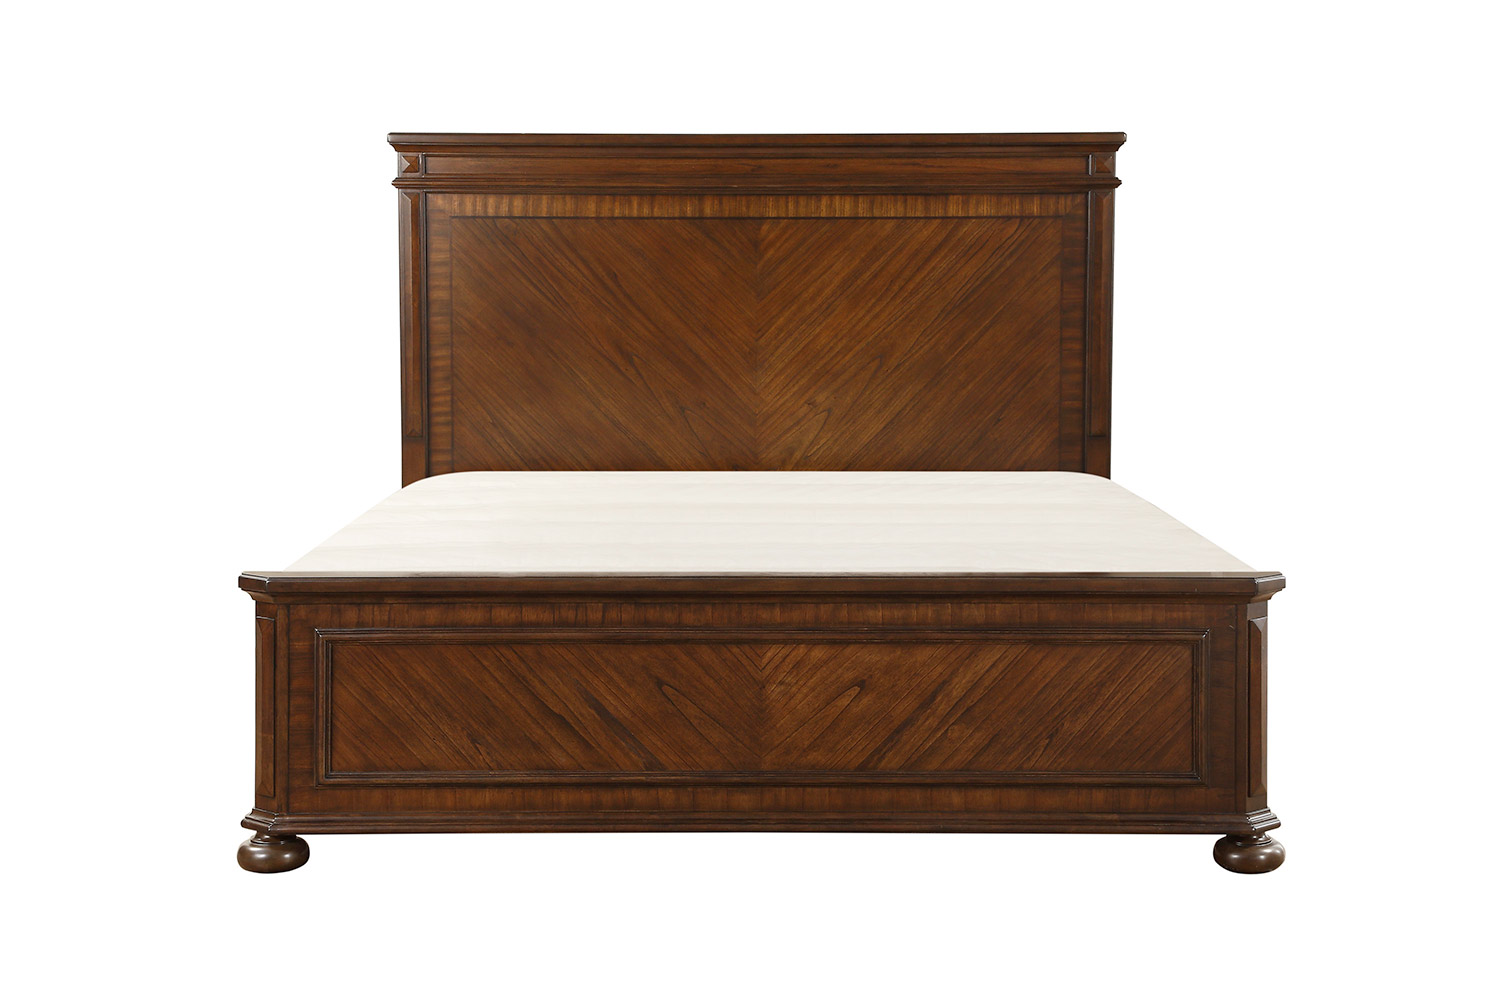 Homelegance Langsat Panel Bed - Brown